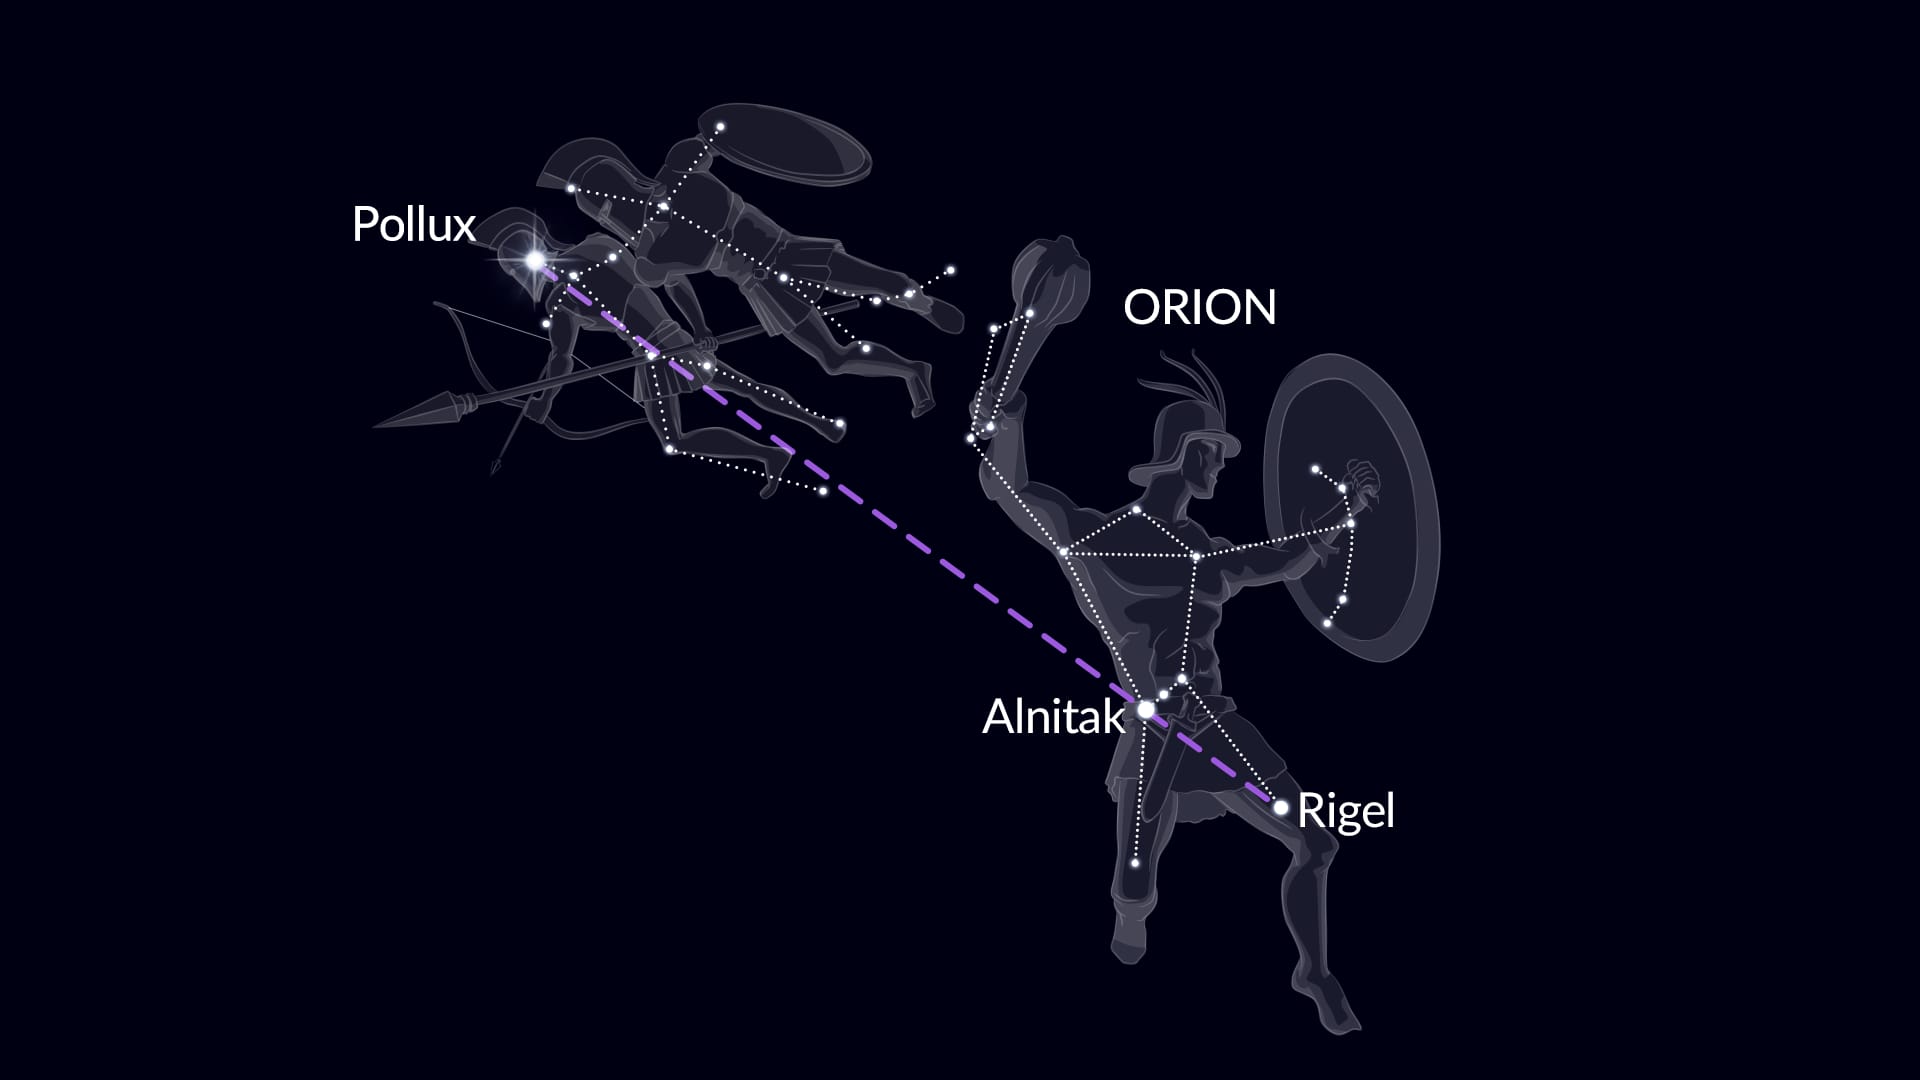 Trouver Pollux via Orion